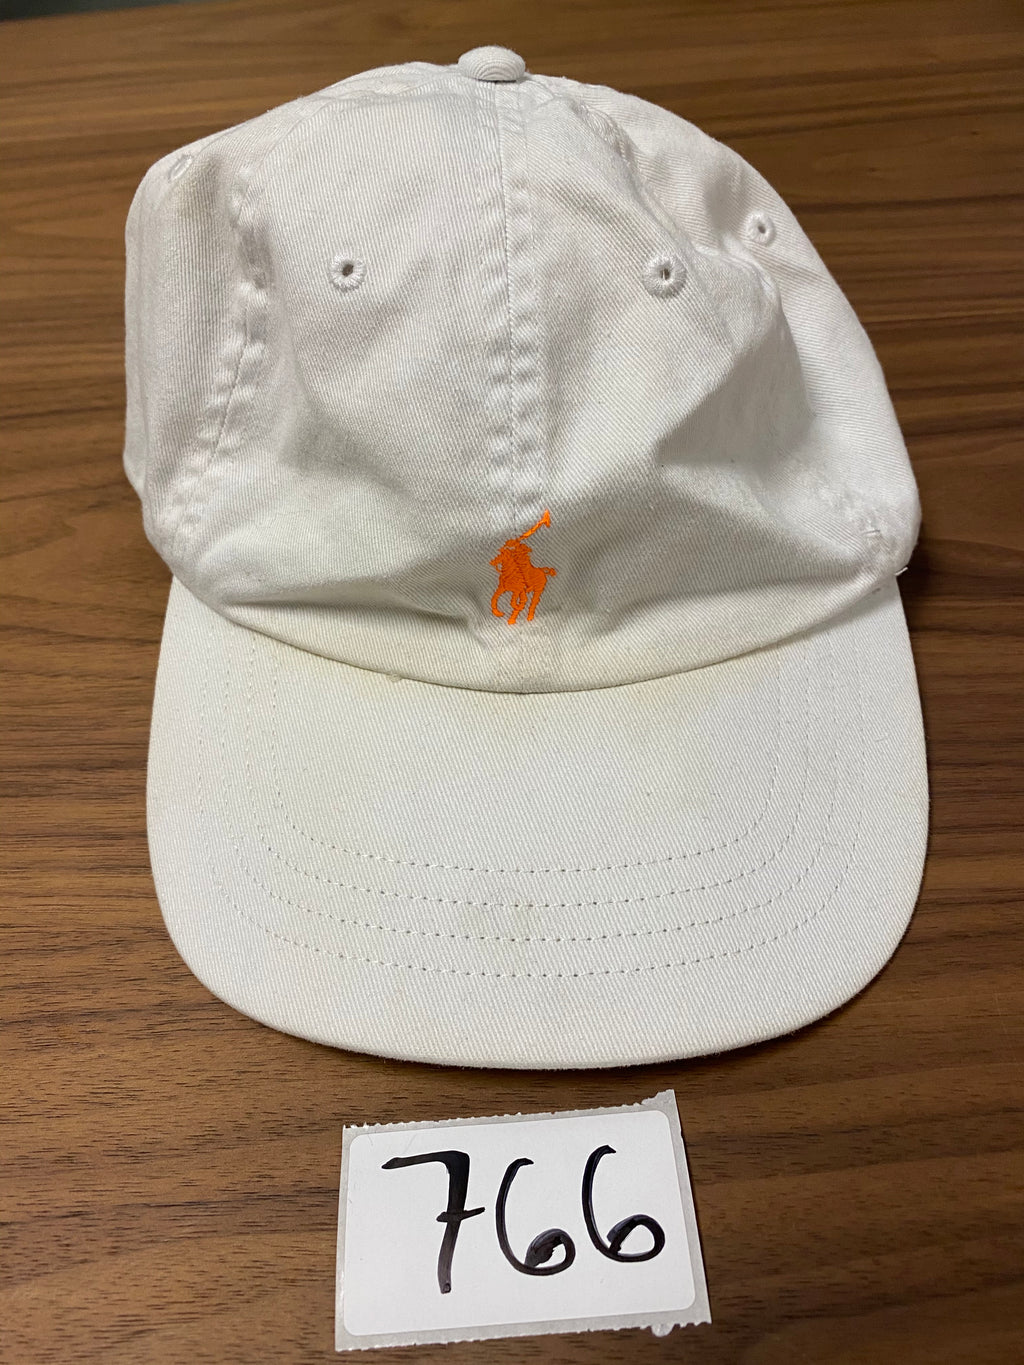 Ralph Lauren Polo Hat - White/orange